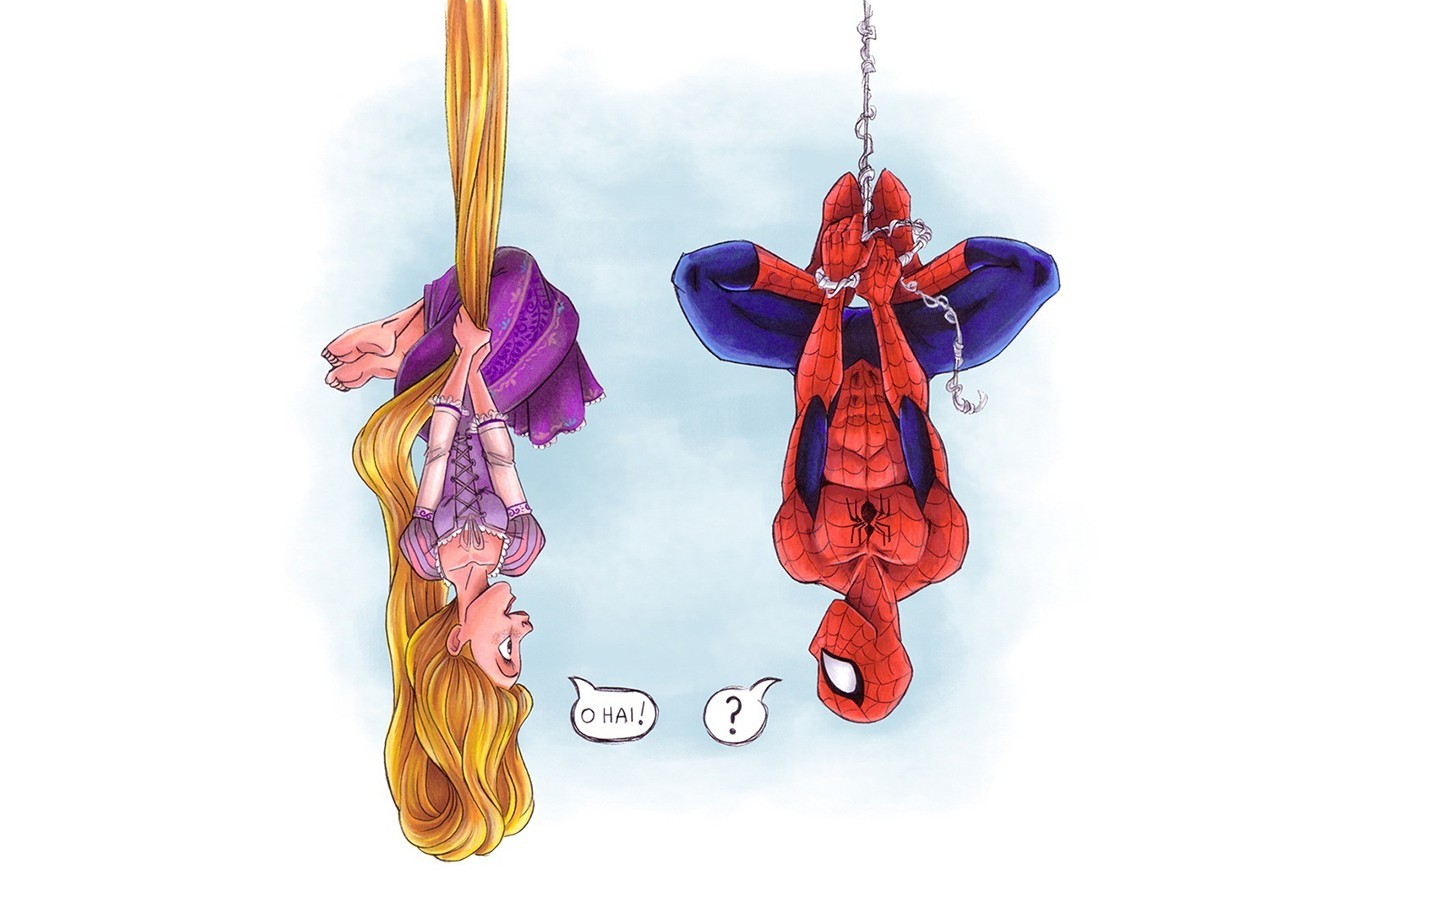 General 1440x900 Rapunzel spider Spider-Man movies upside down long hair Tangled crossover comics Disney humor speech bubble superhero